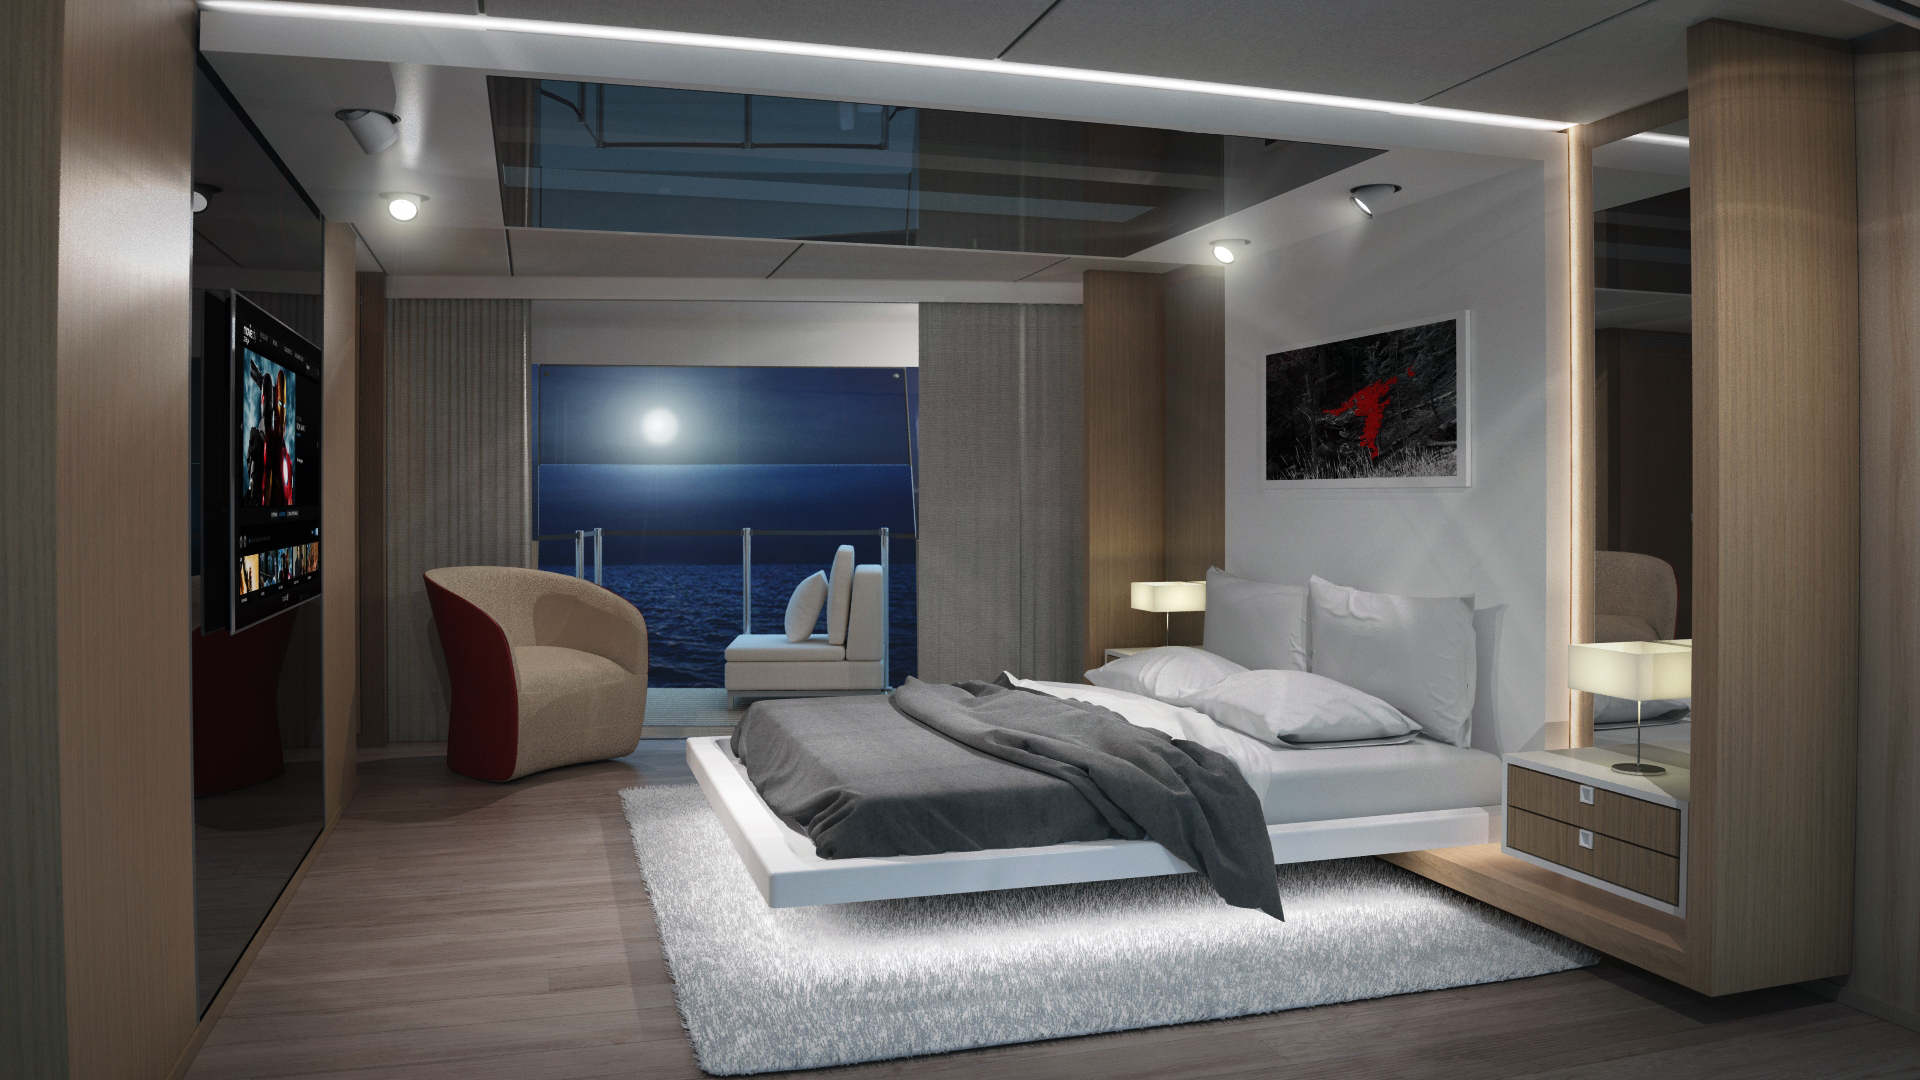 Luxi95,solar motoryacht,superyacht,luxury interiors, master